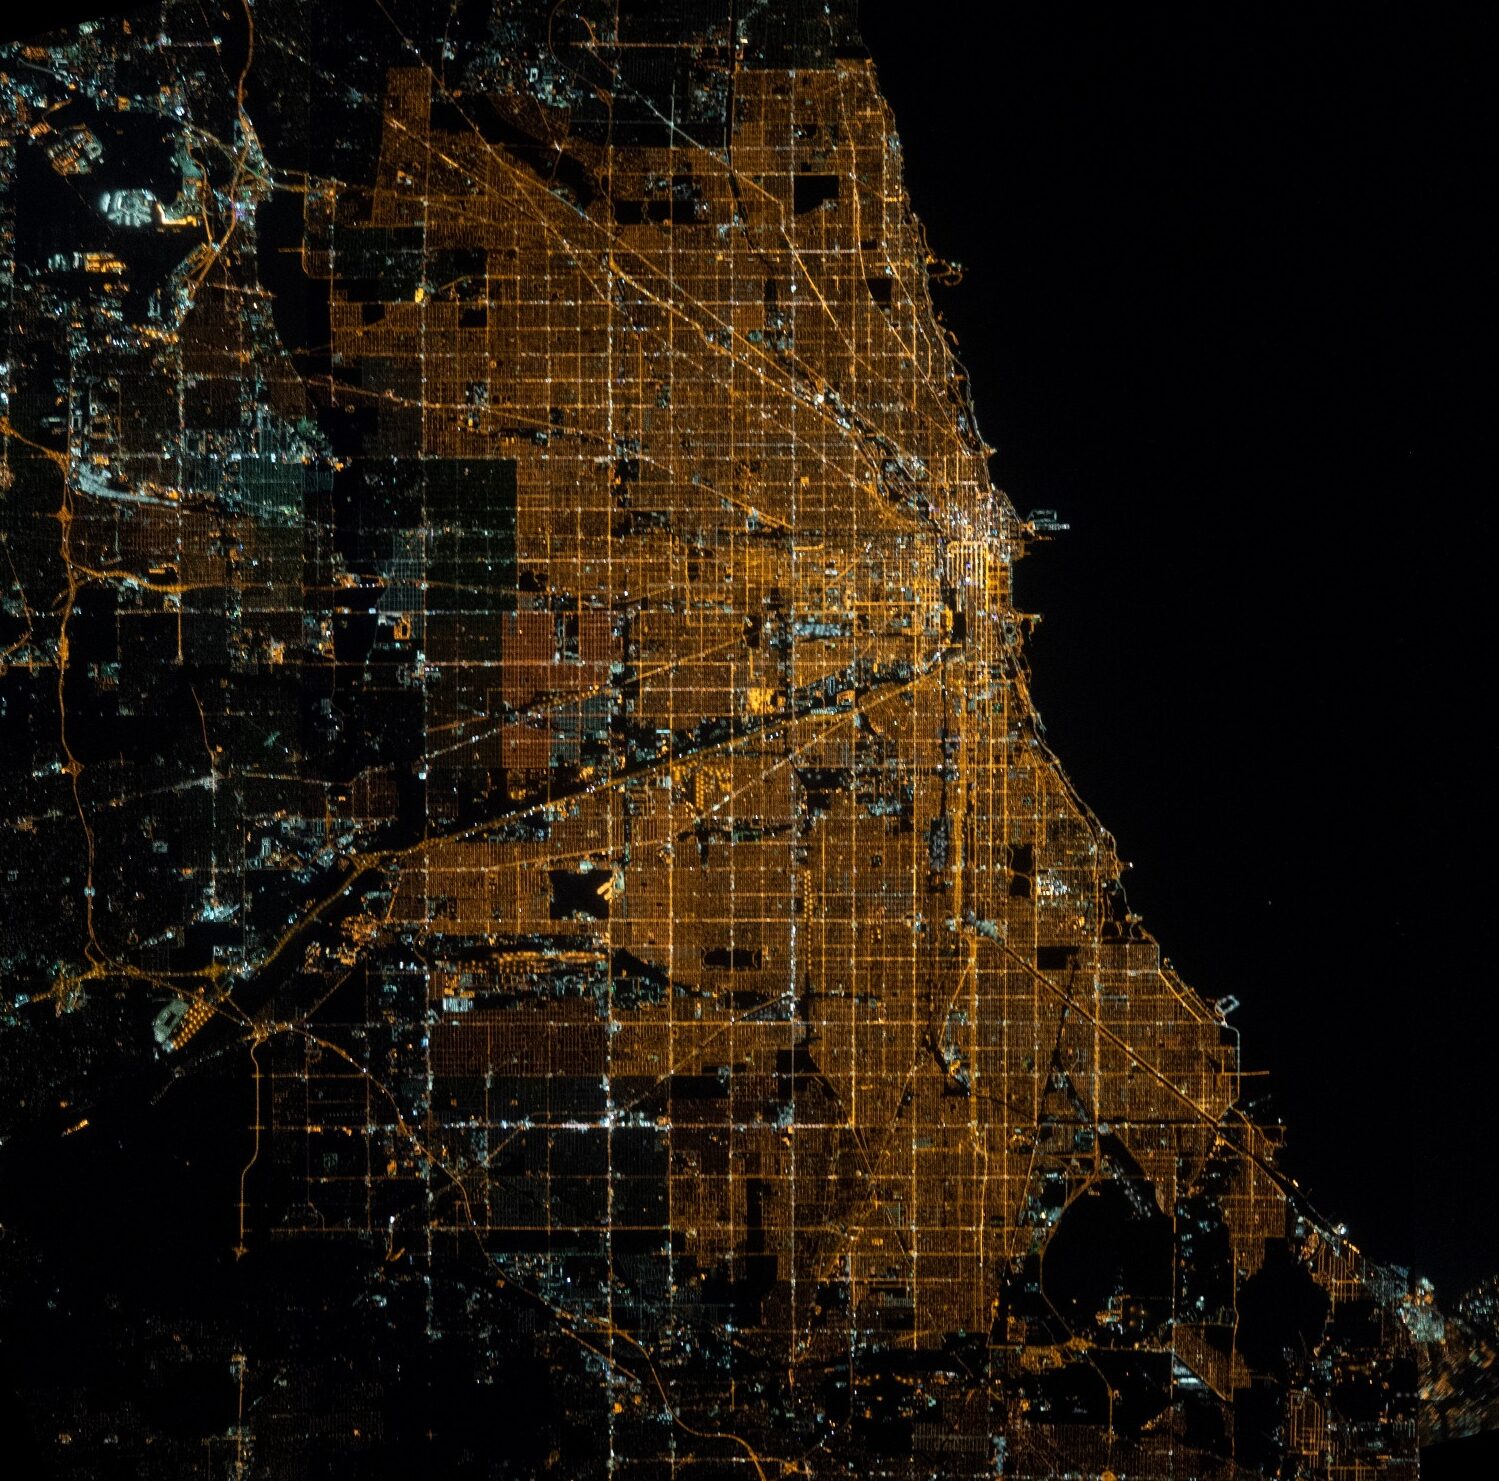 Image Caption: Bird’s eye image of Chicago’s grid taken at night. Image Credit: NASA/ISS